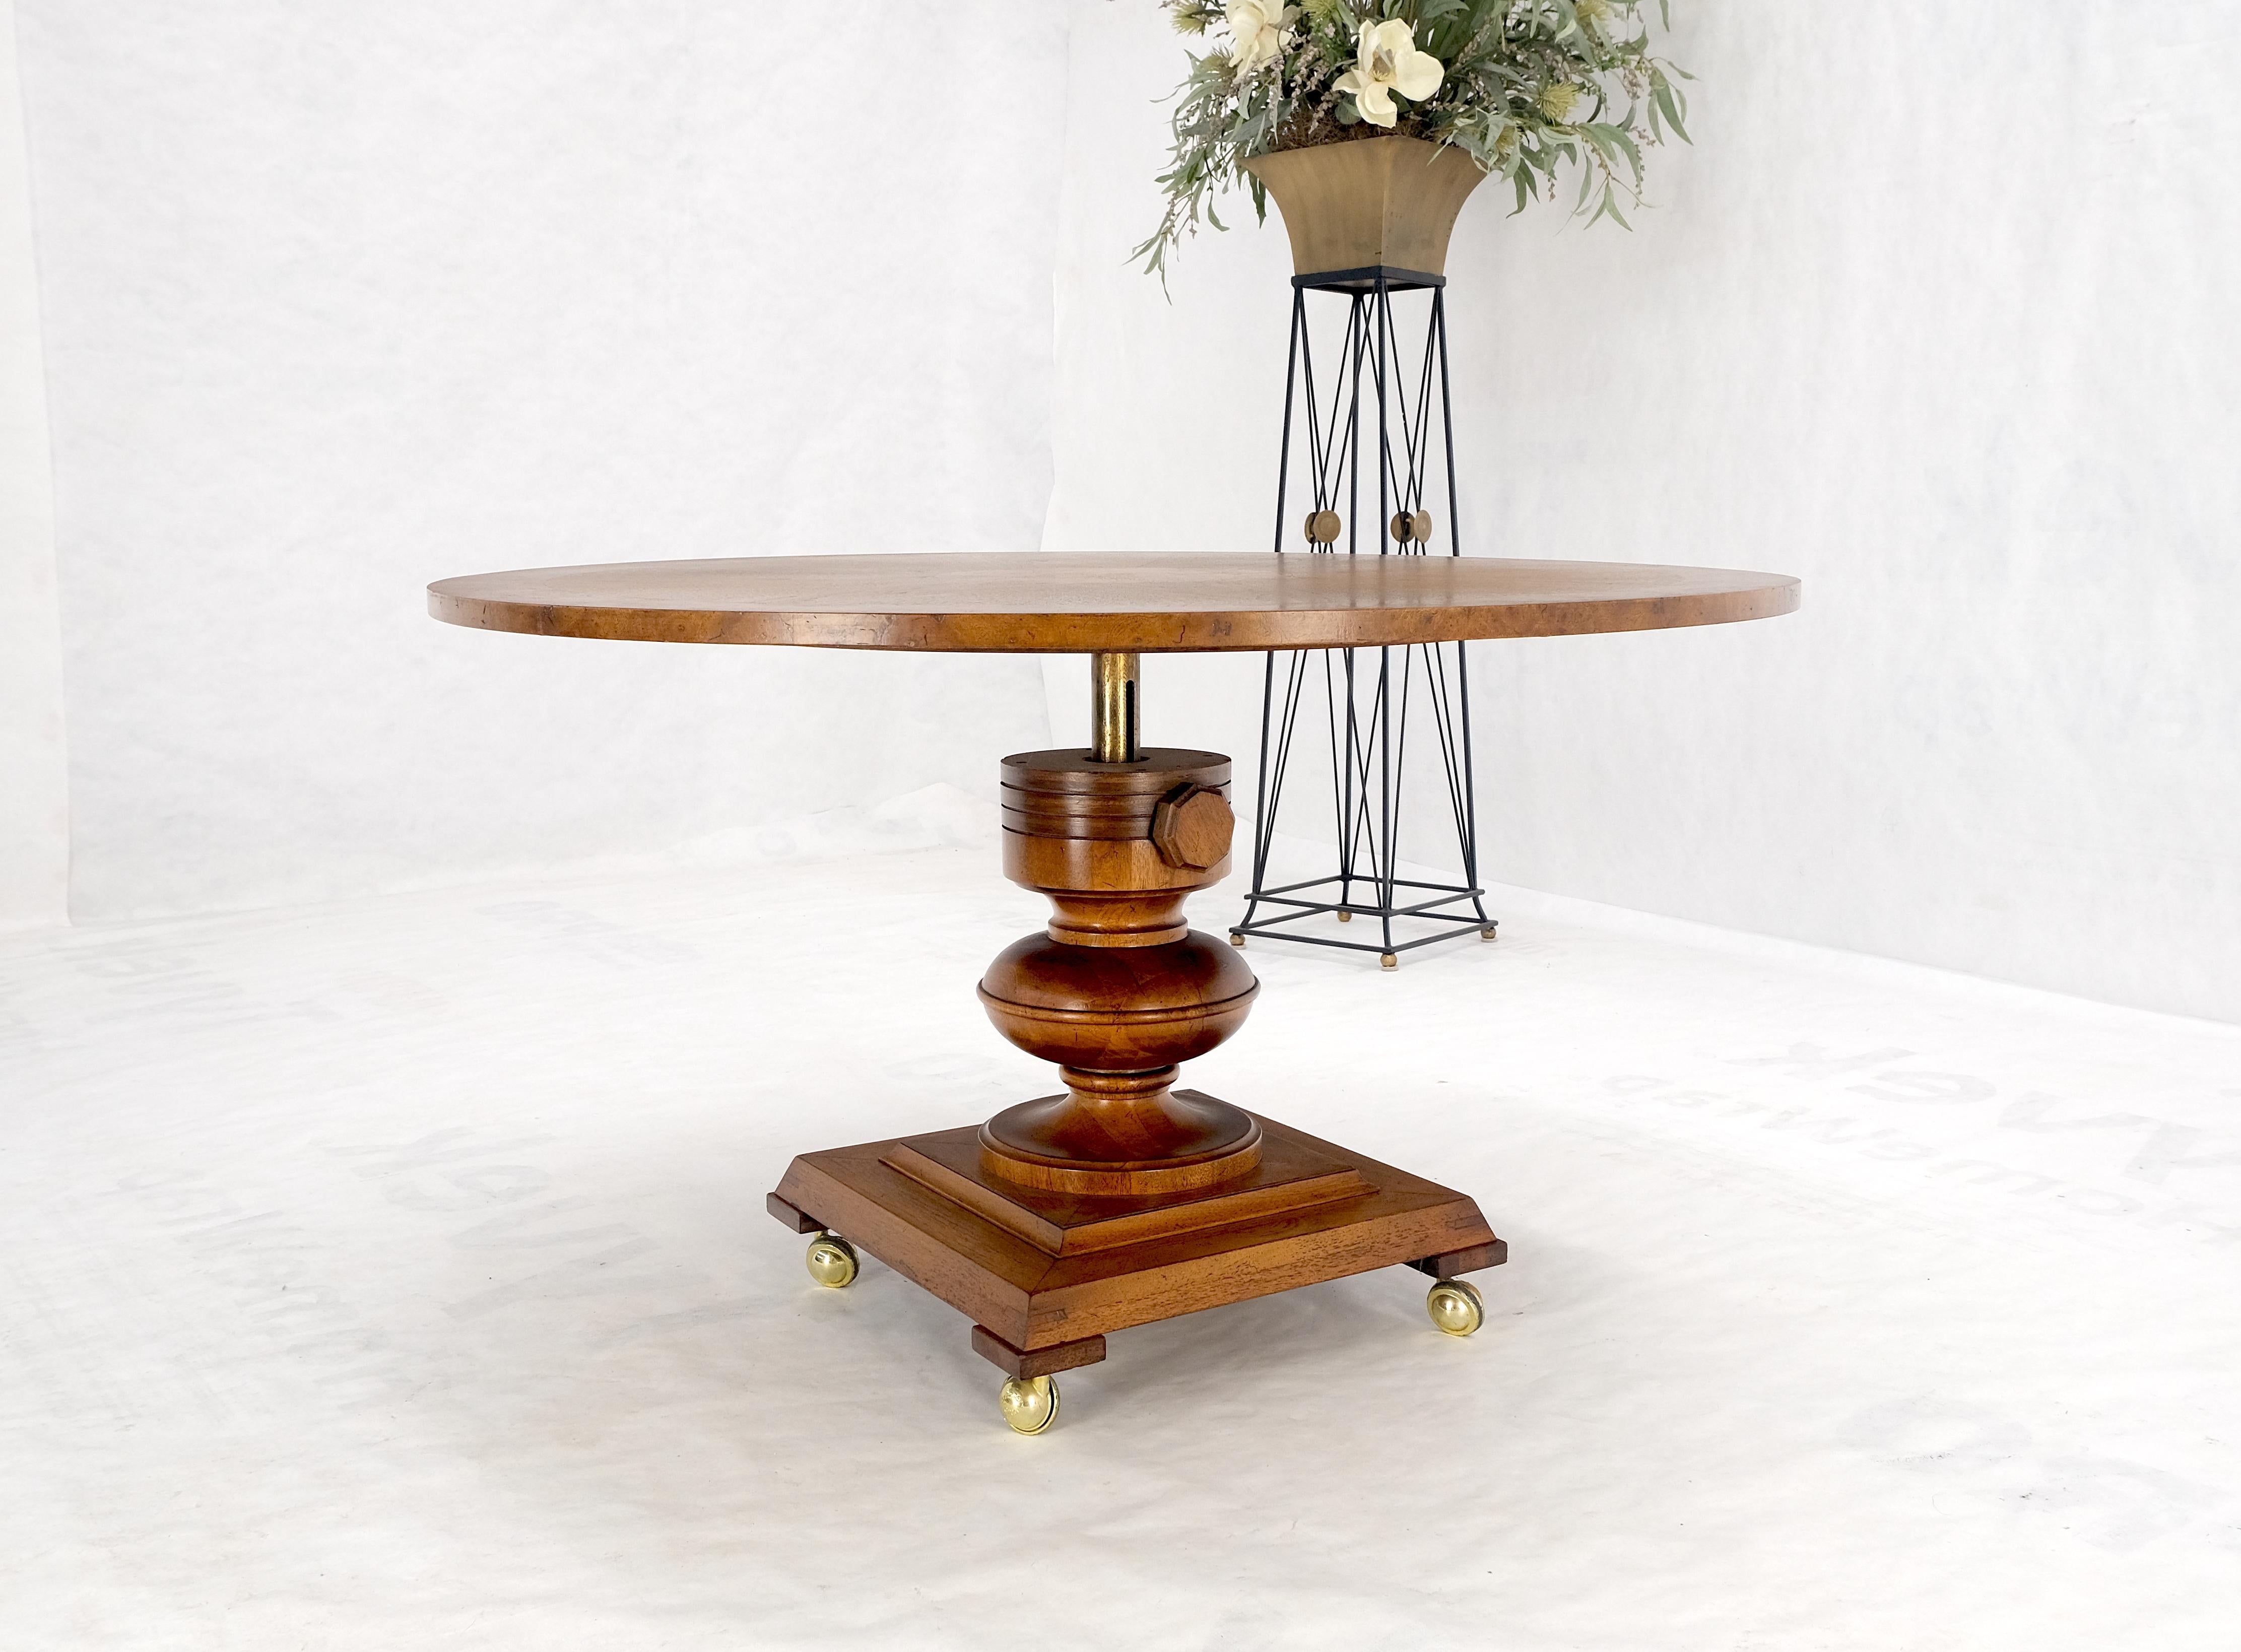 Round Burl Wood Adjustable Height Single Pedestal Base Dining-Coffee Table MINT!
Rare höhenverstellbarer Tisch 25-29 